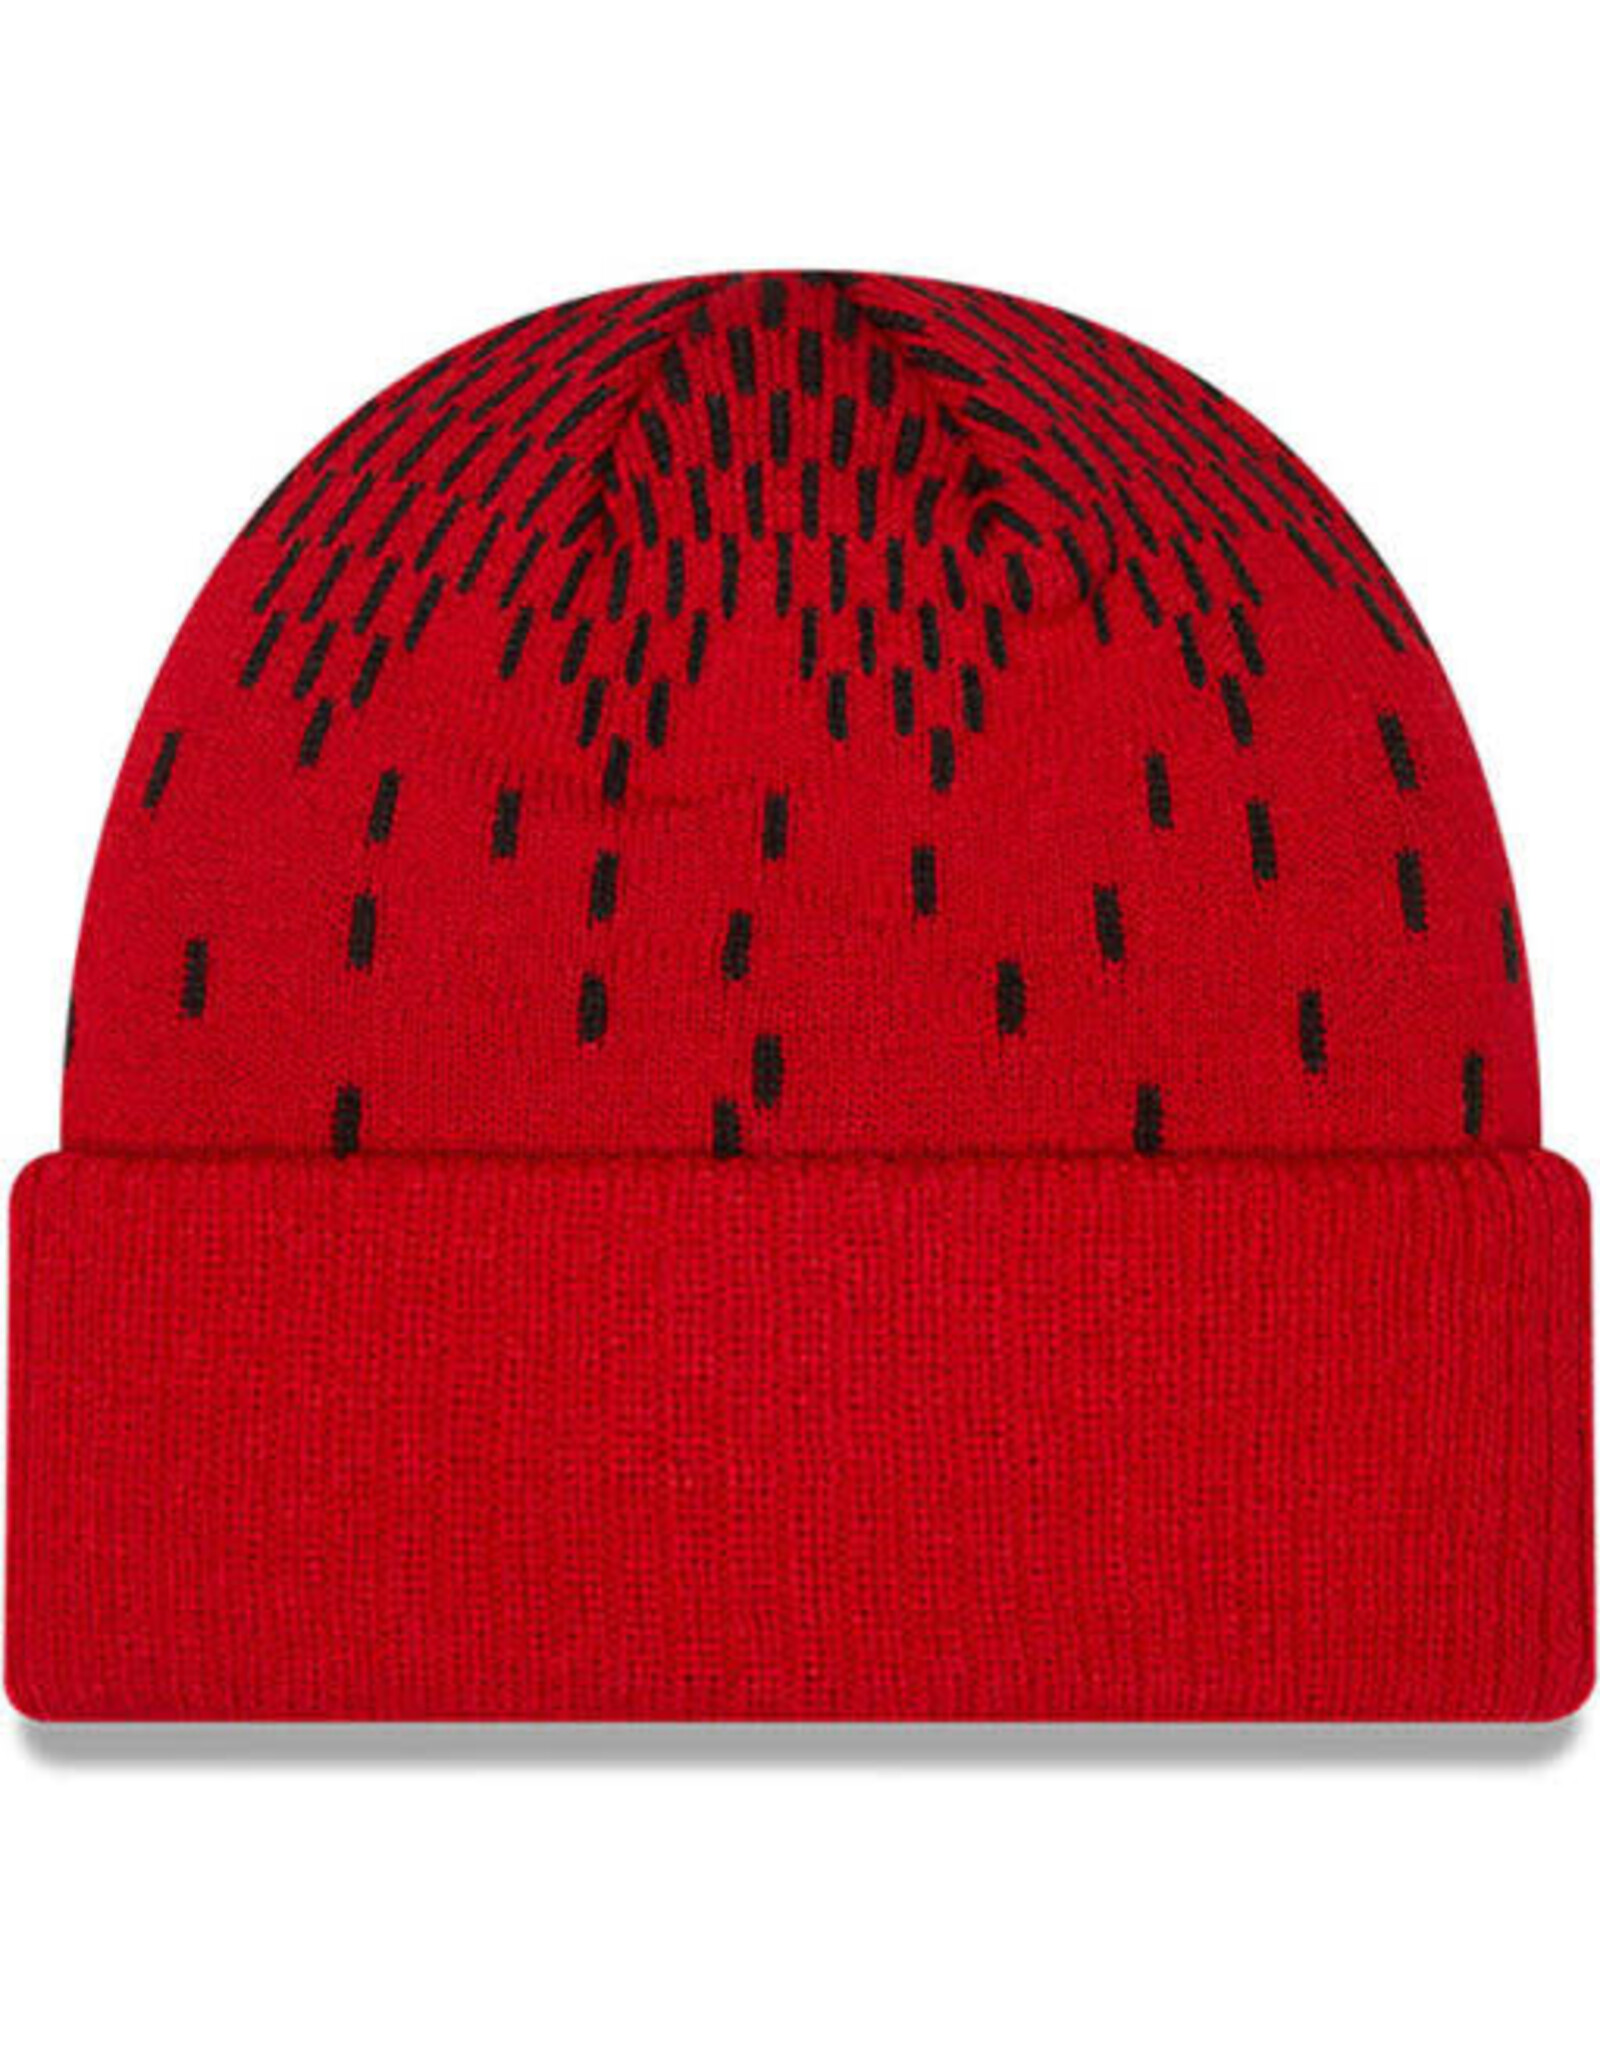 New Era Ohio State Buckeyes Knit Freeze Beanie Hat